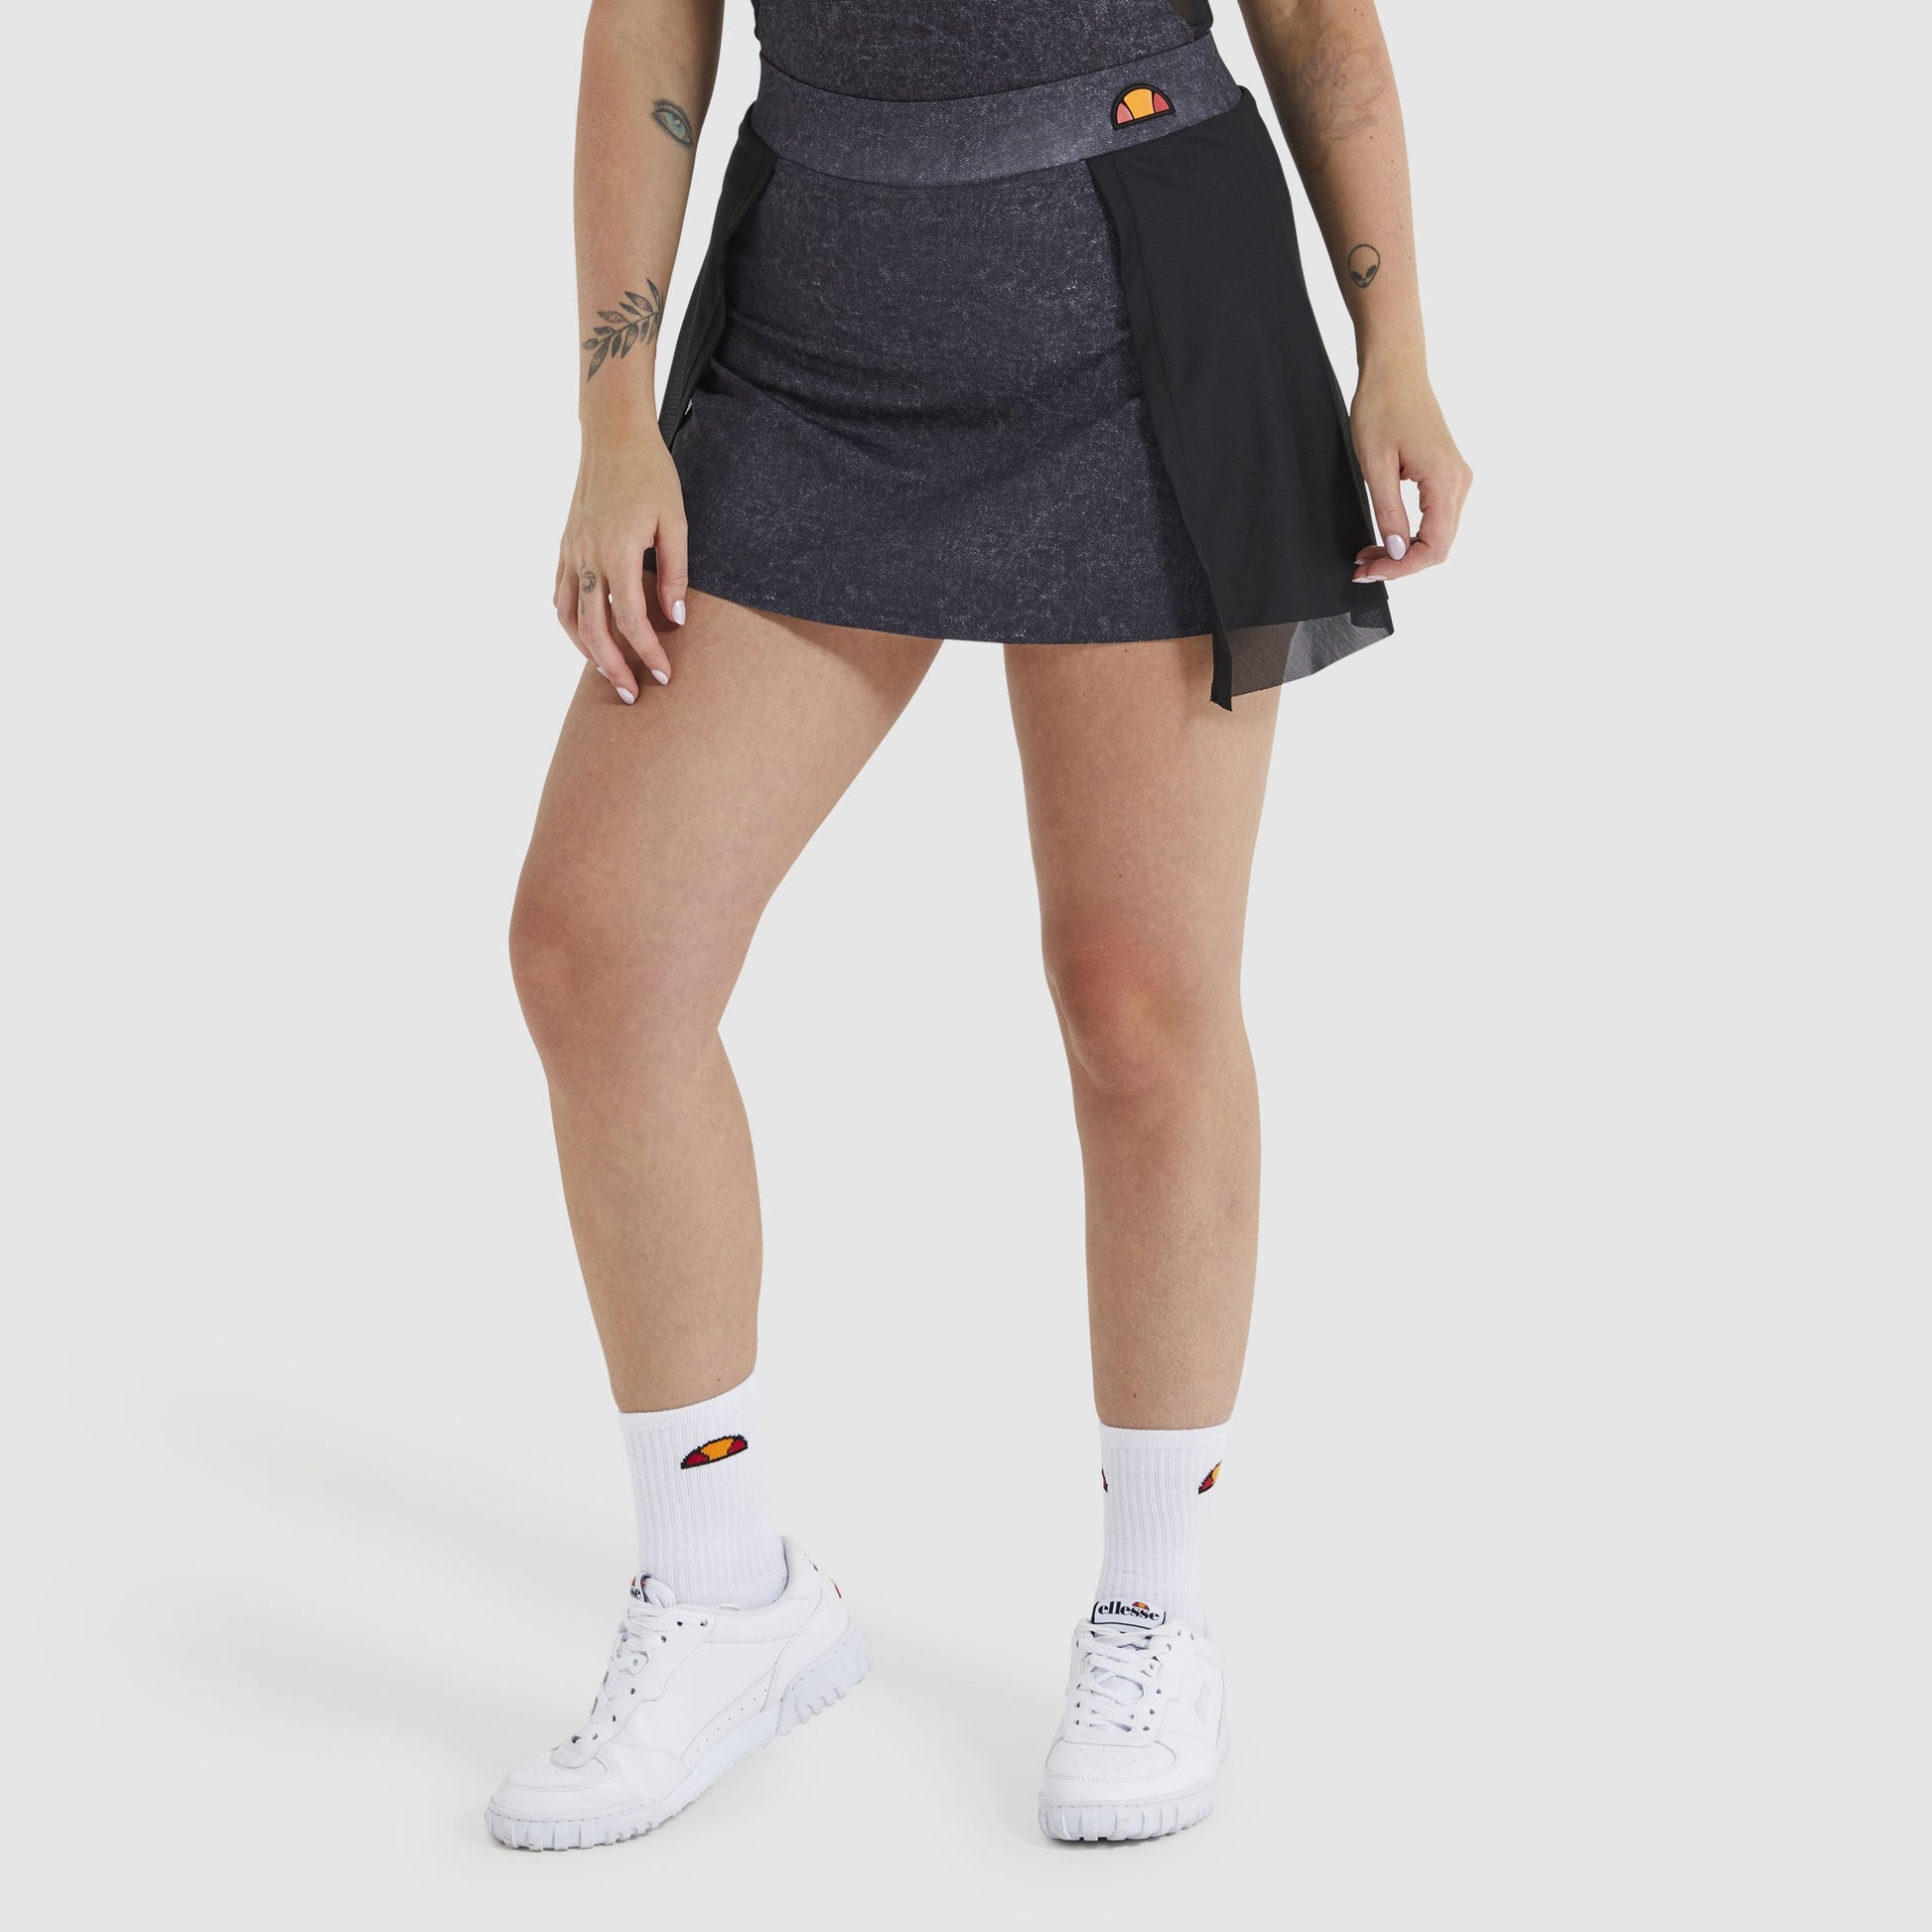 ellesse NewCo Women\'s Brands Skort – Tennis